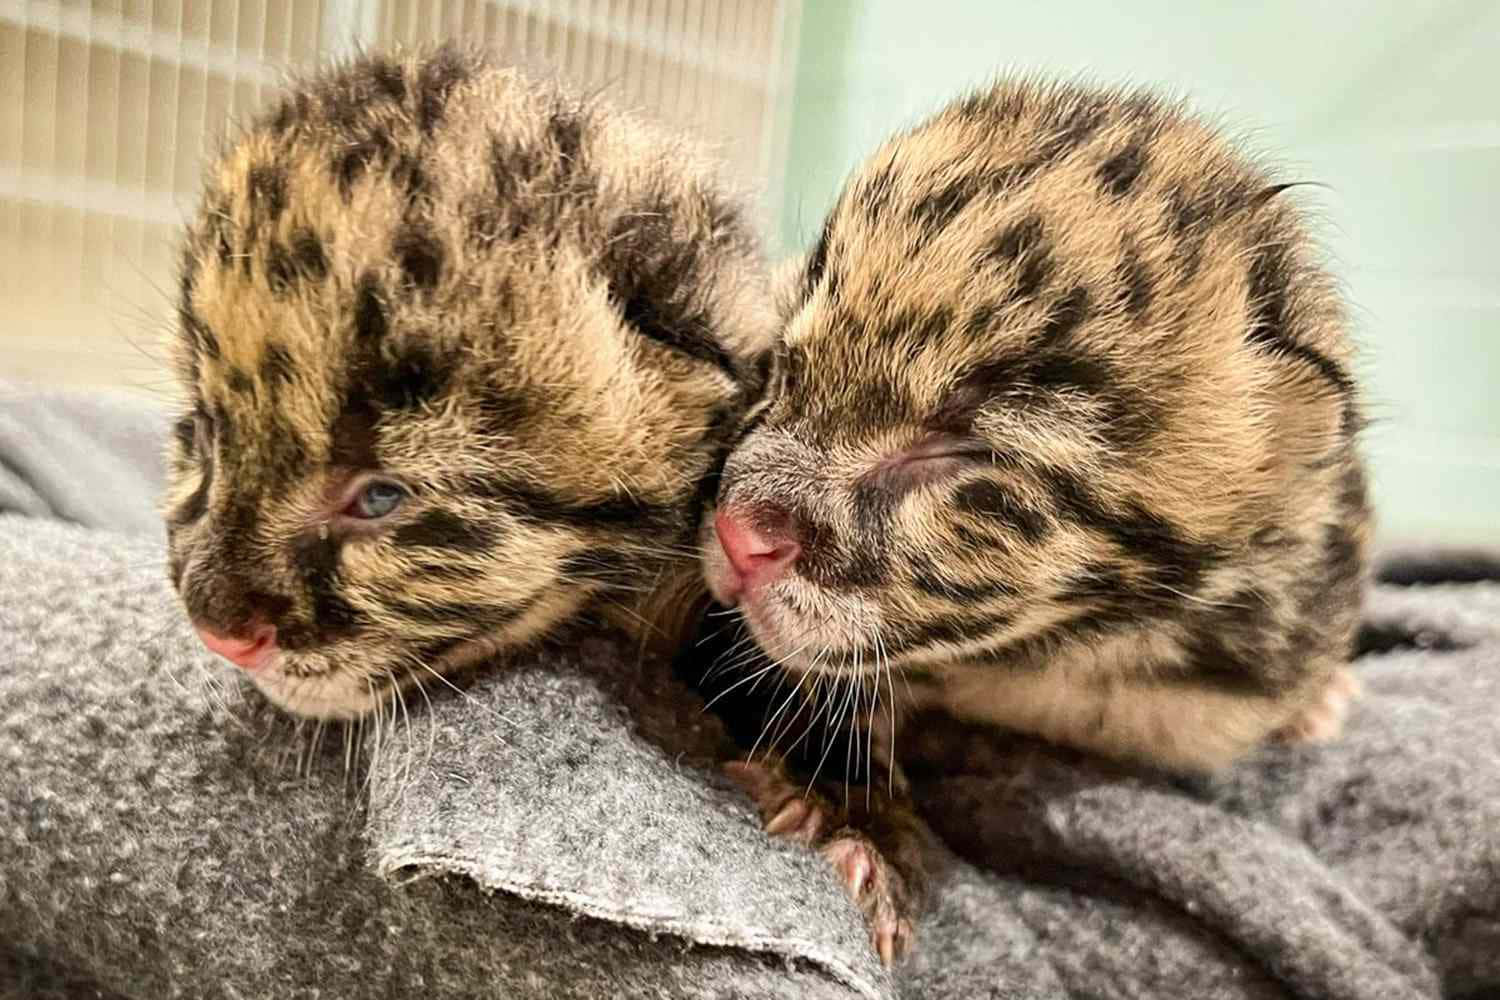 Imagende Leopardos Bebés Acurrucados